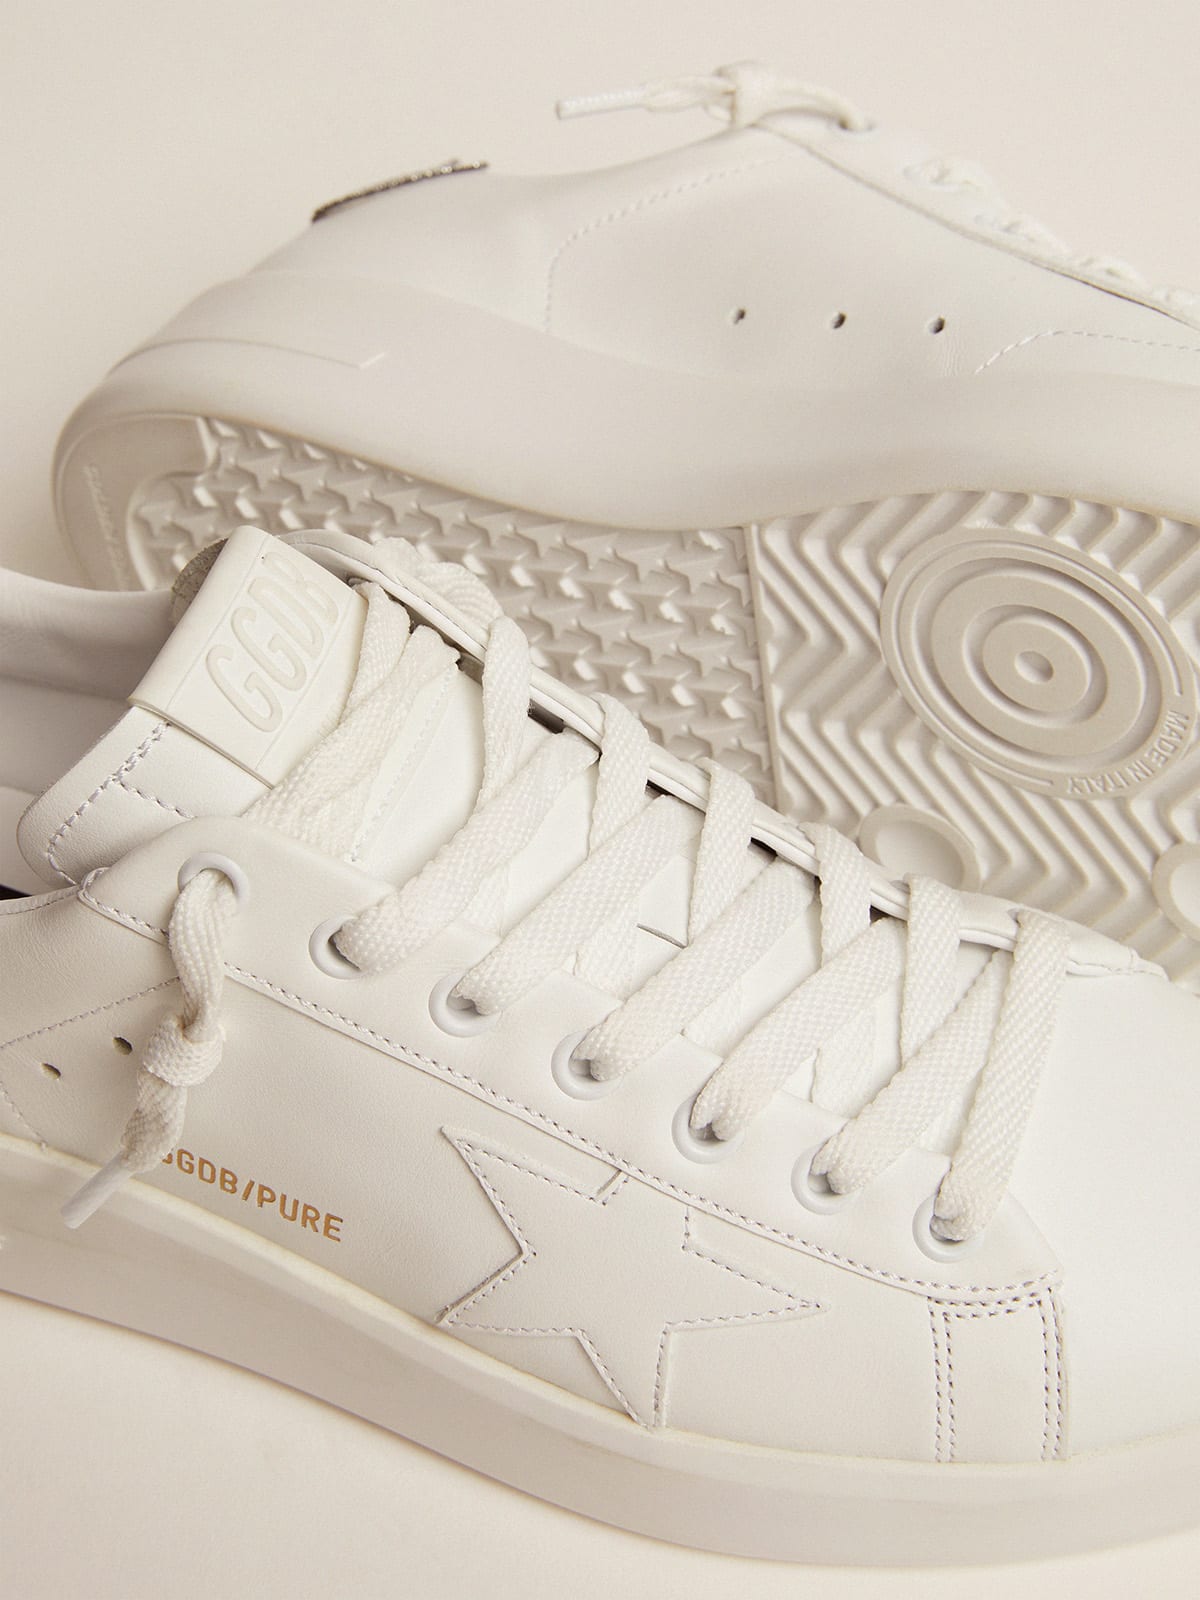 Golden Goose - Sneaker Purestar in pelle bianca con talloncino in cristalli Swarovski argento in 